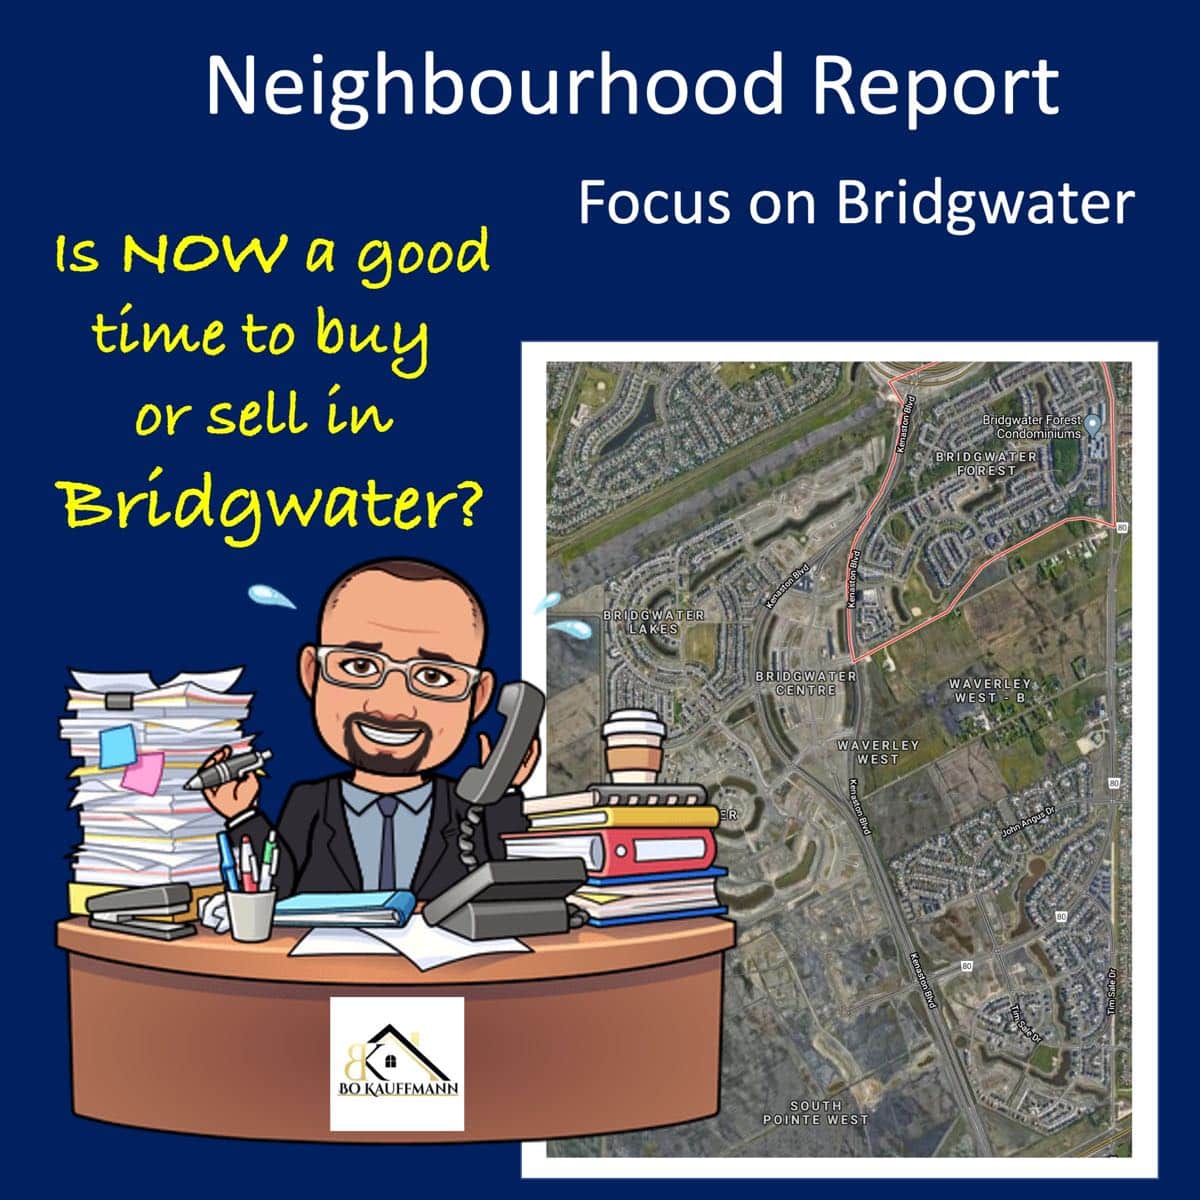 Bridgwater Neighbourhood Report investing in real estate